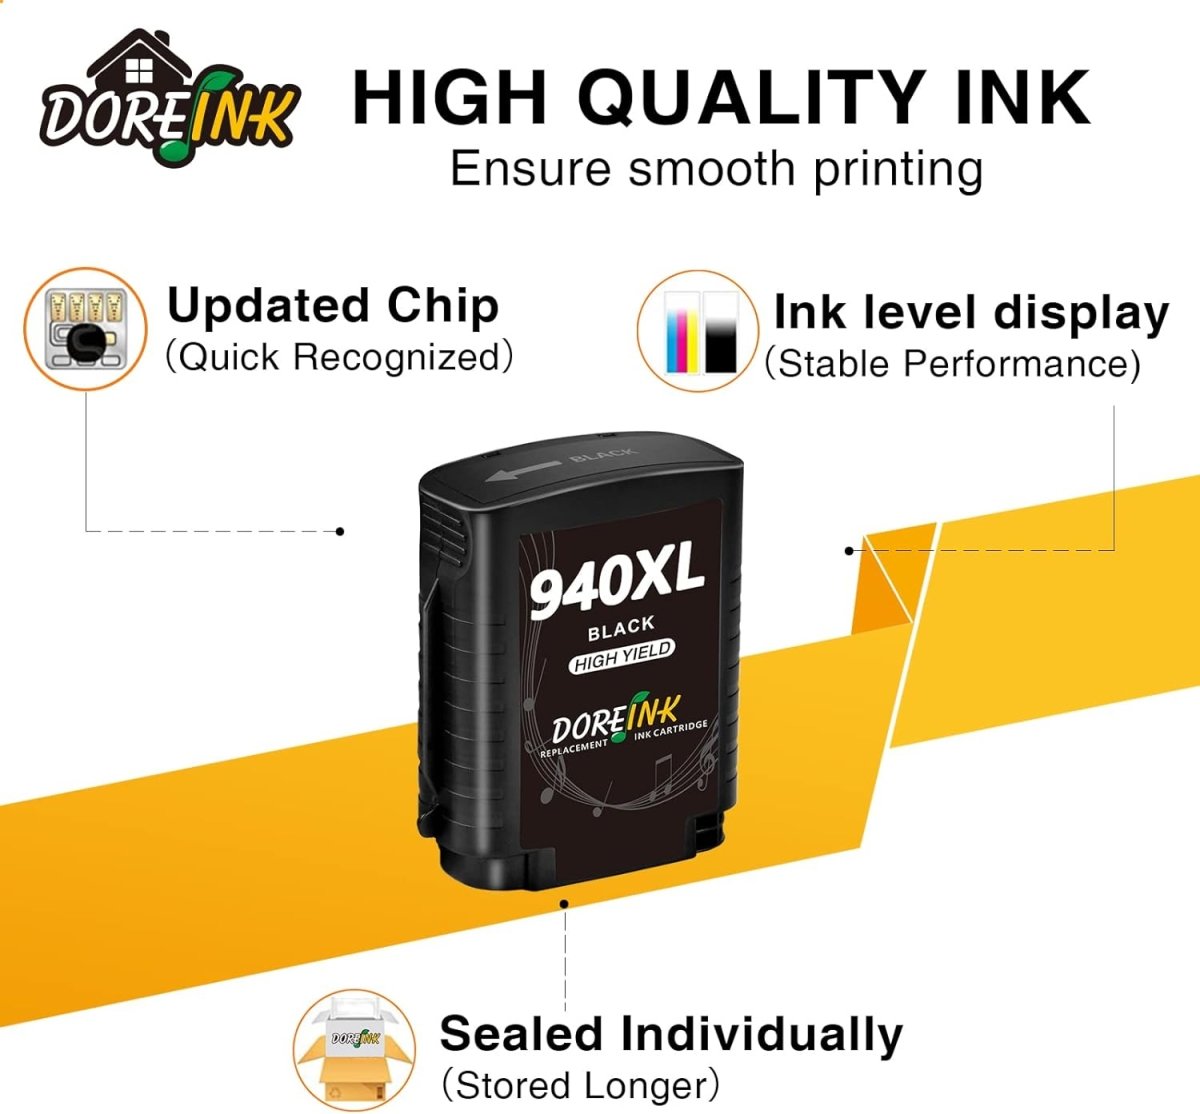 Compatible HP 940XL Ink Cartridge (3 Black 1 Cyan 1 Megenta 1 Yellow, 6 Pack) - Linford Office:Printer Ink & Toner Cartridge